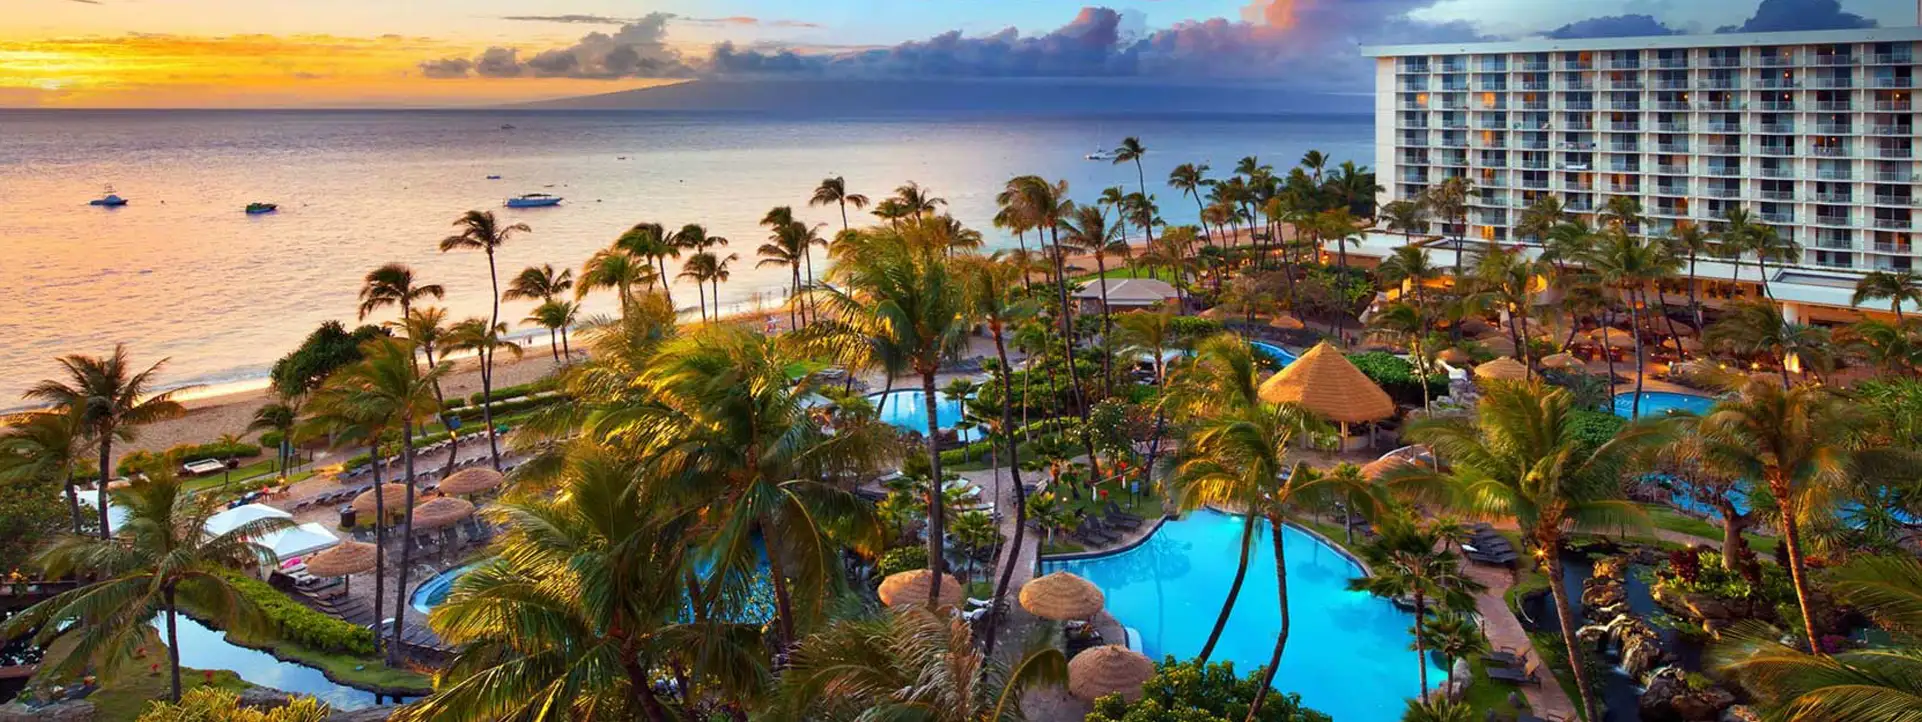 BEST-HAWAII-HONEYMOON-PACKAGES-The-Westin-Maiu-Resort-Spa-banner